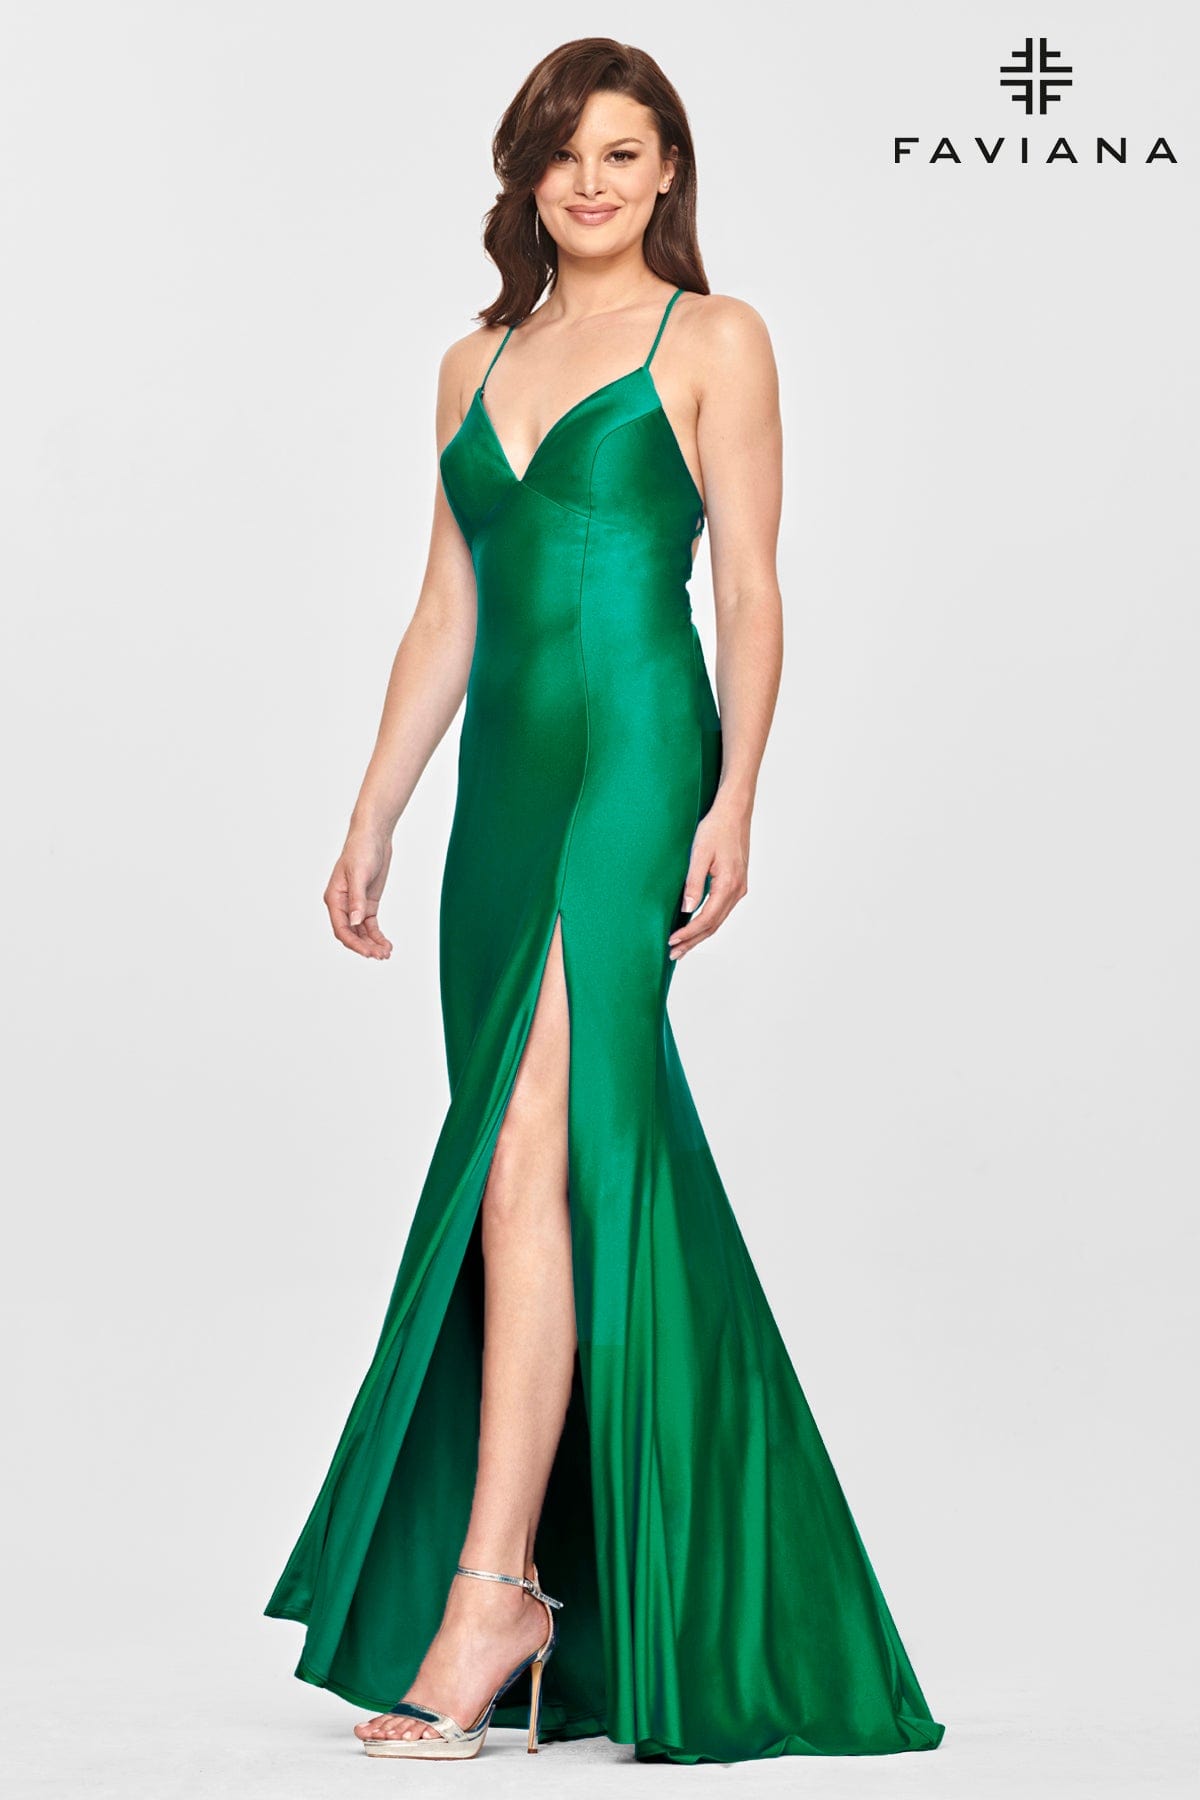 Dark Emerald V Neckline Prom Dress With Stretch Fabric And Corset Back